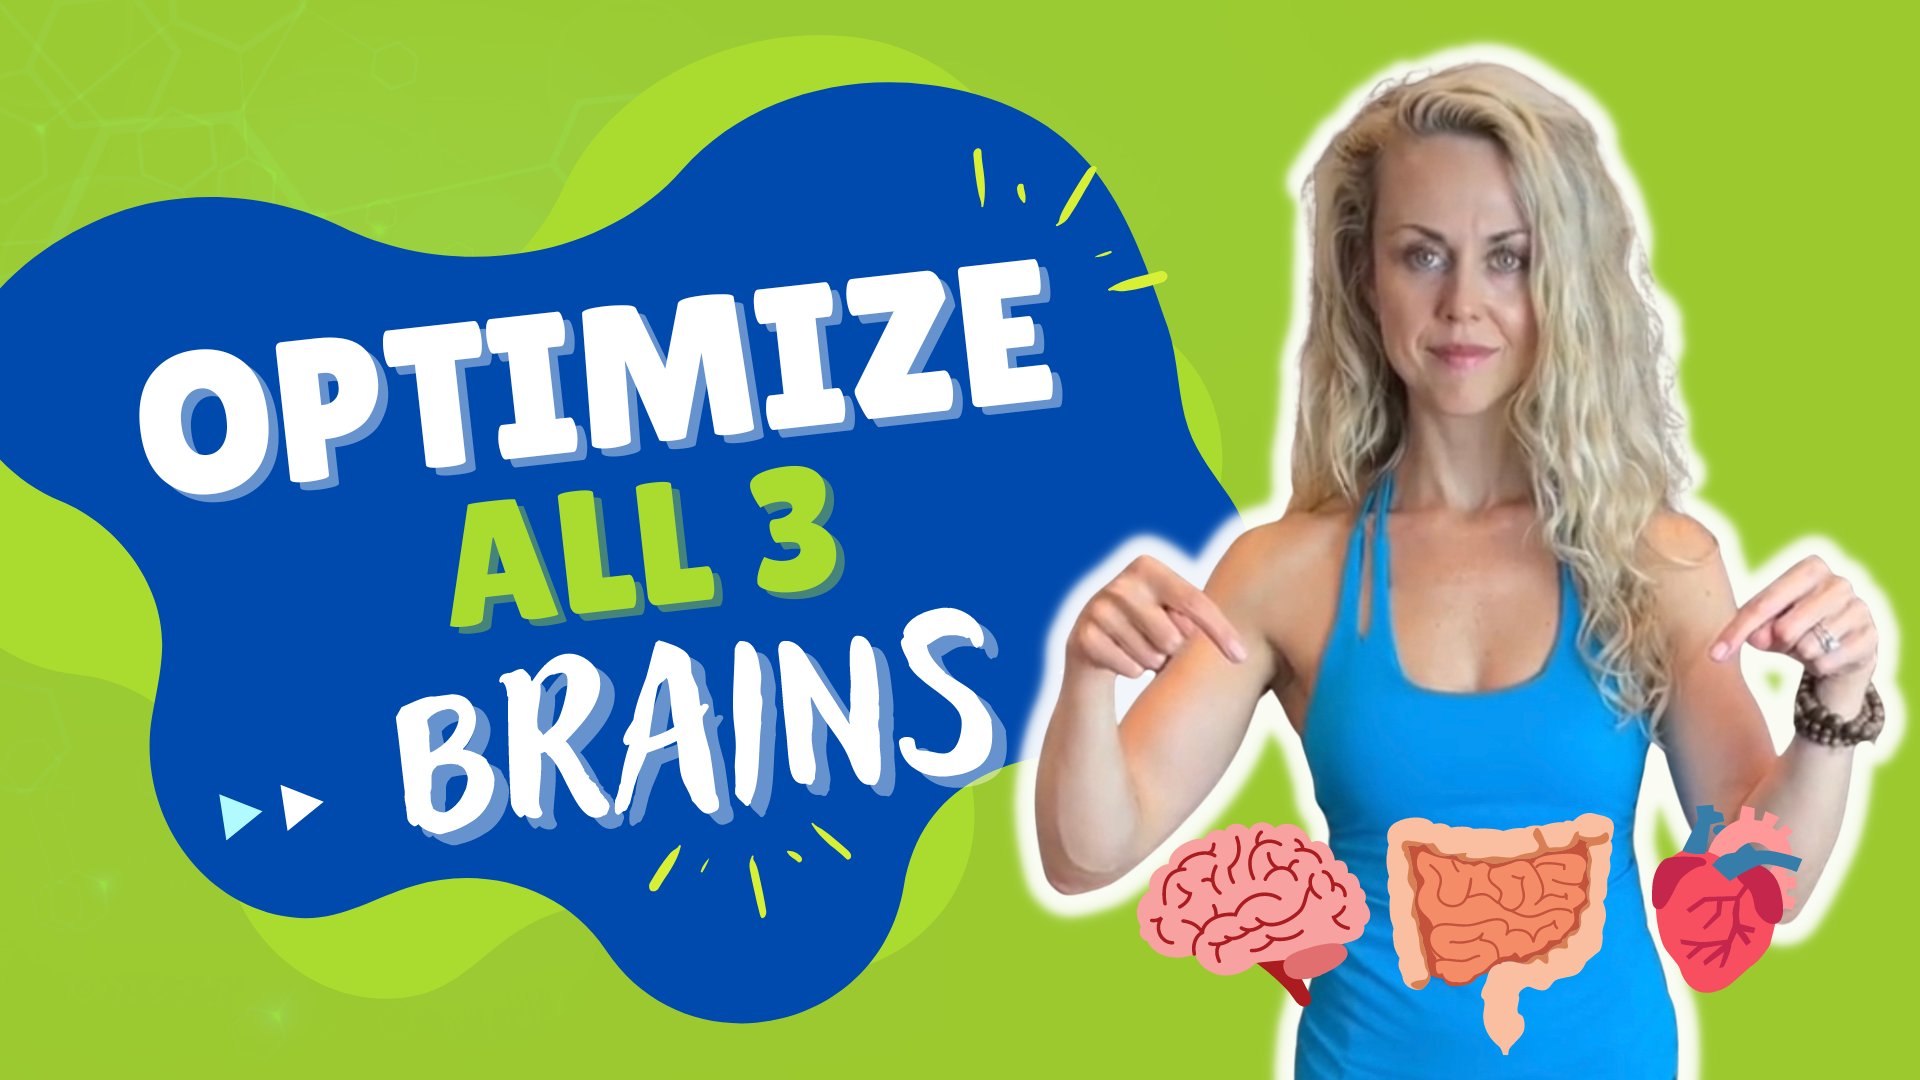 Optimize all 3 brains